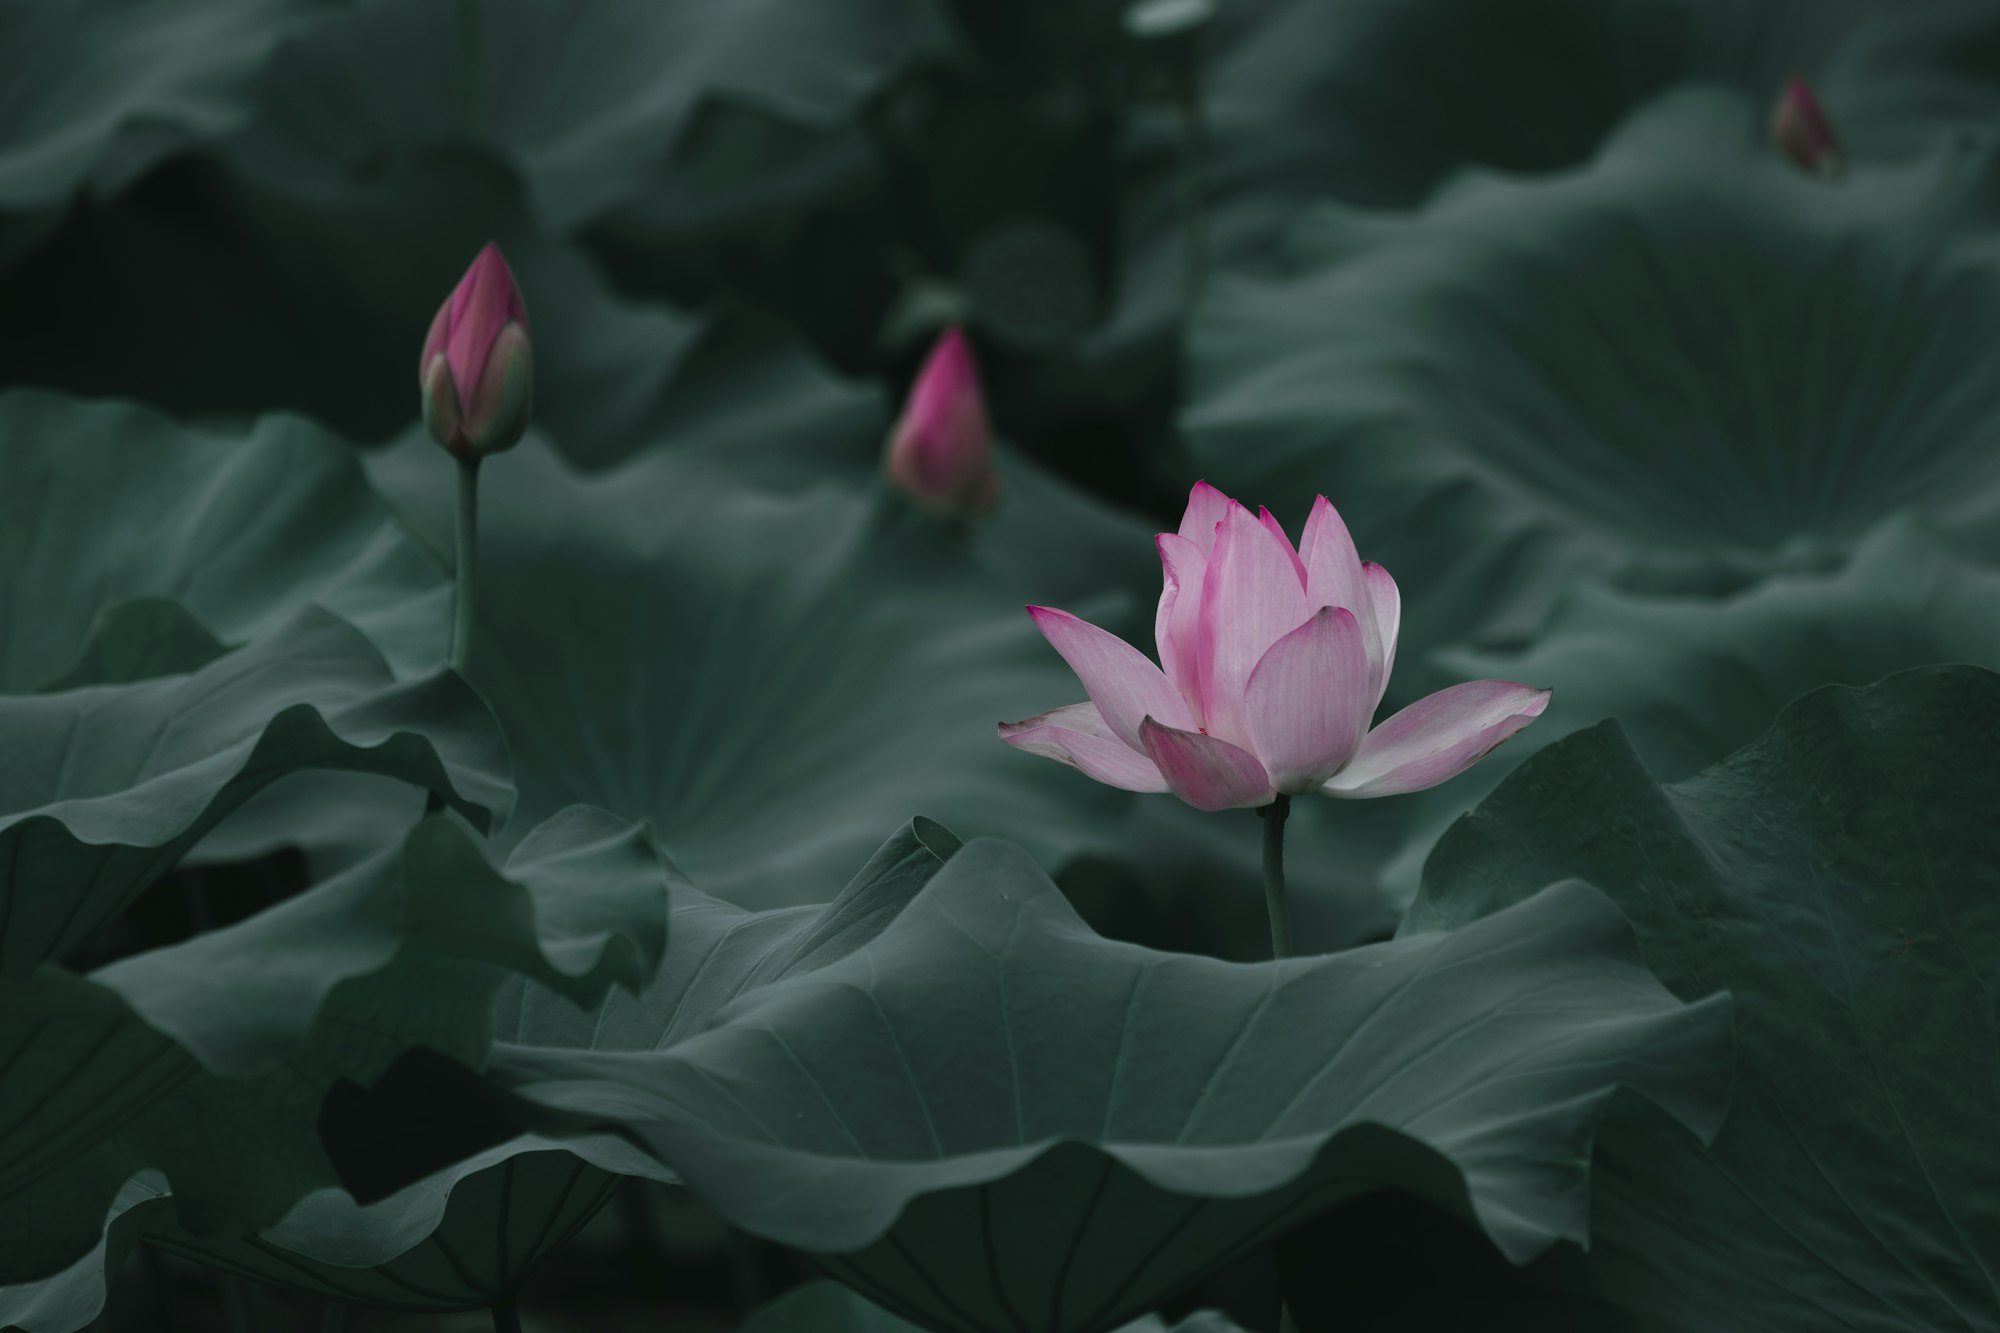 Closeup shot of a blooming Lotus flower